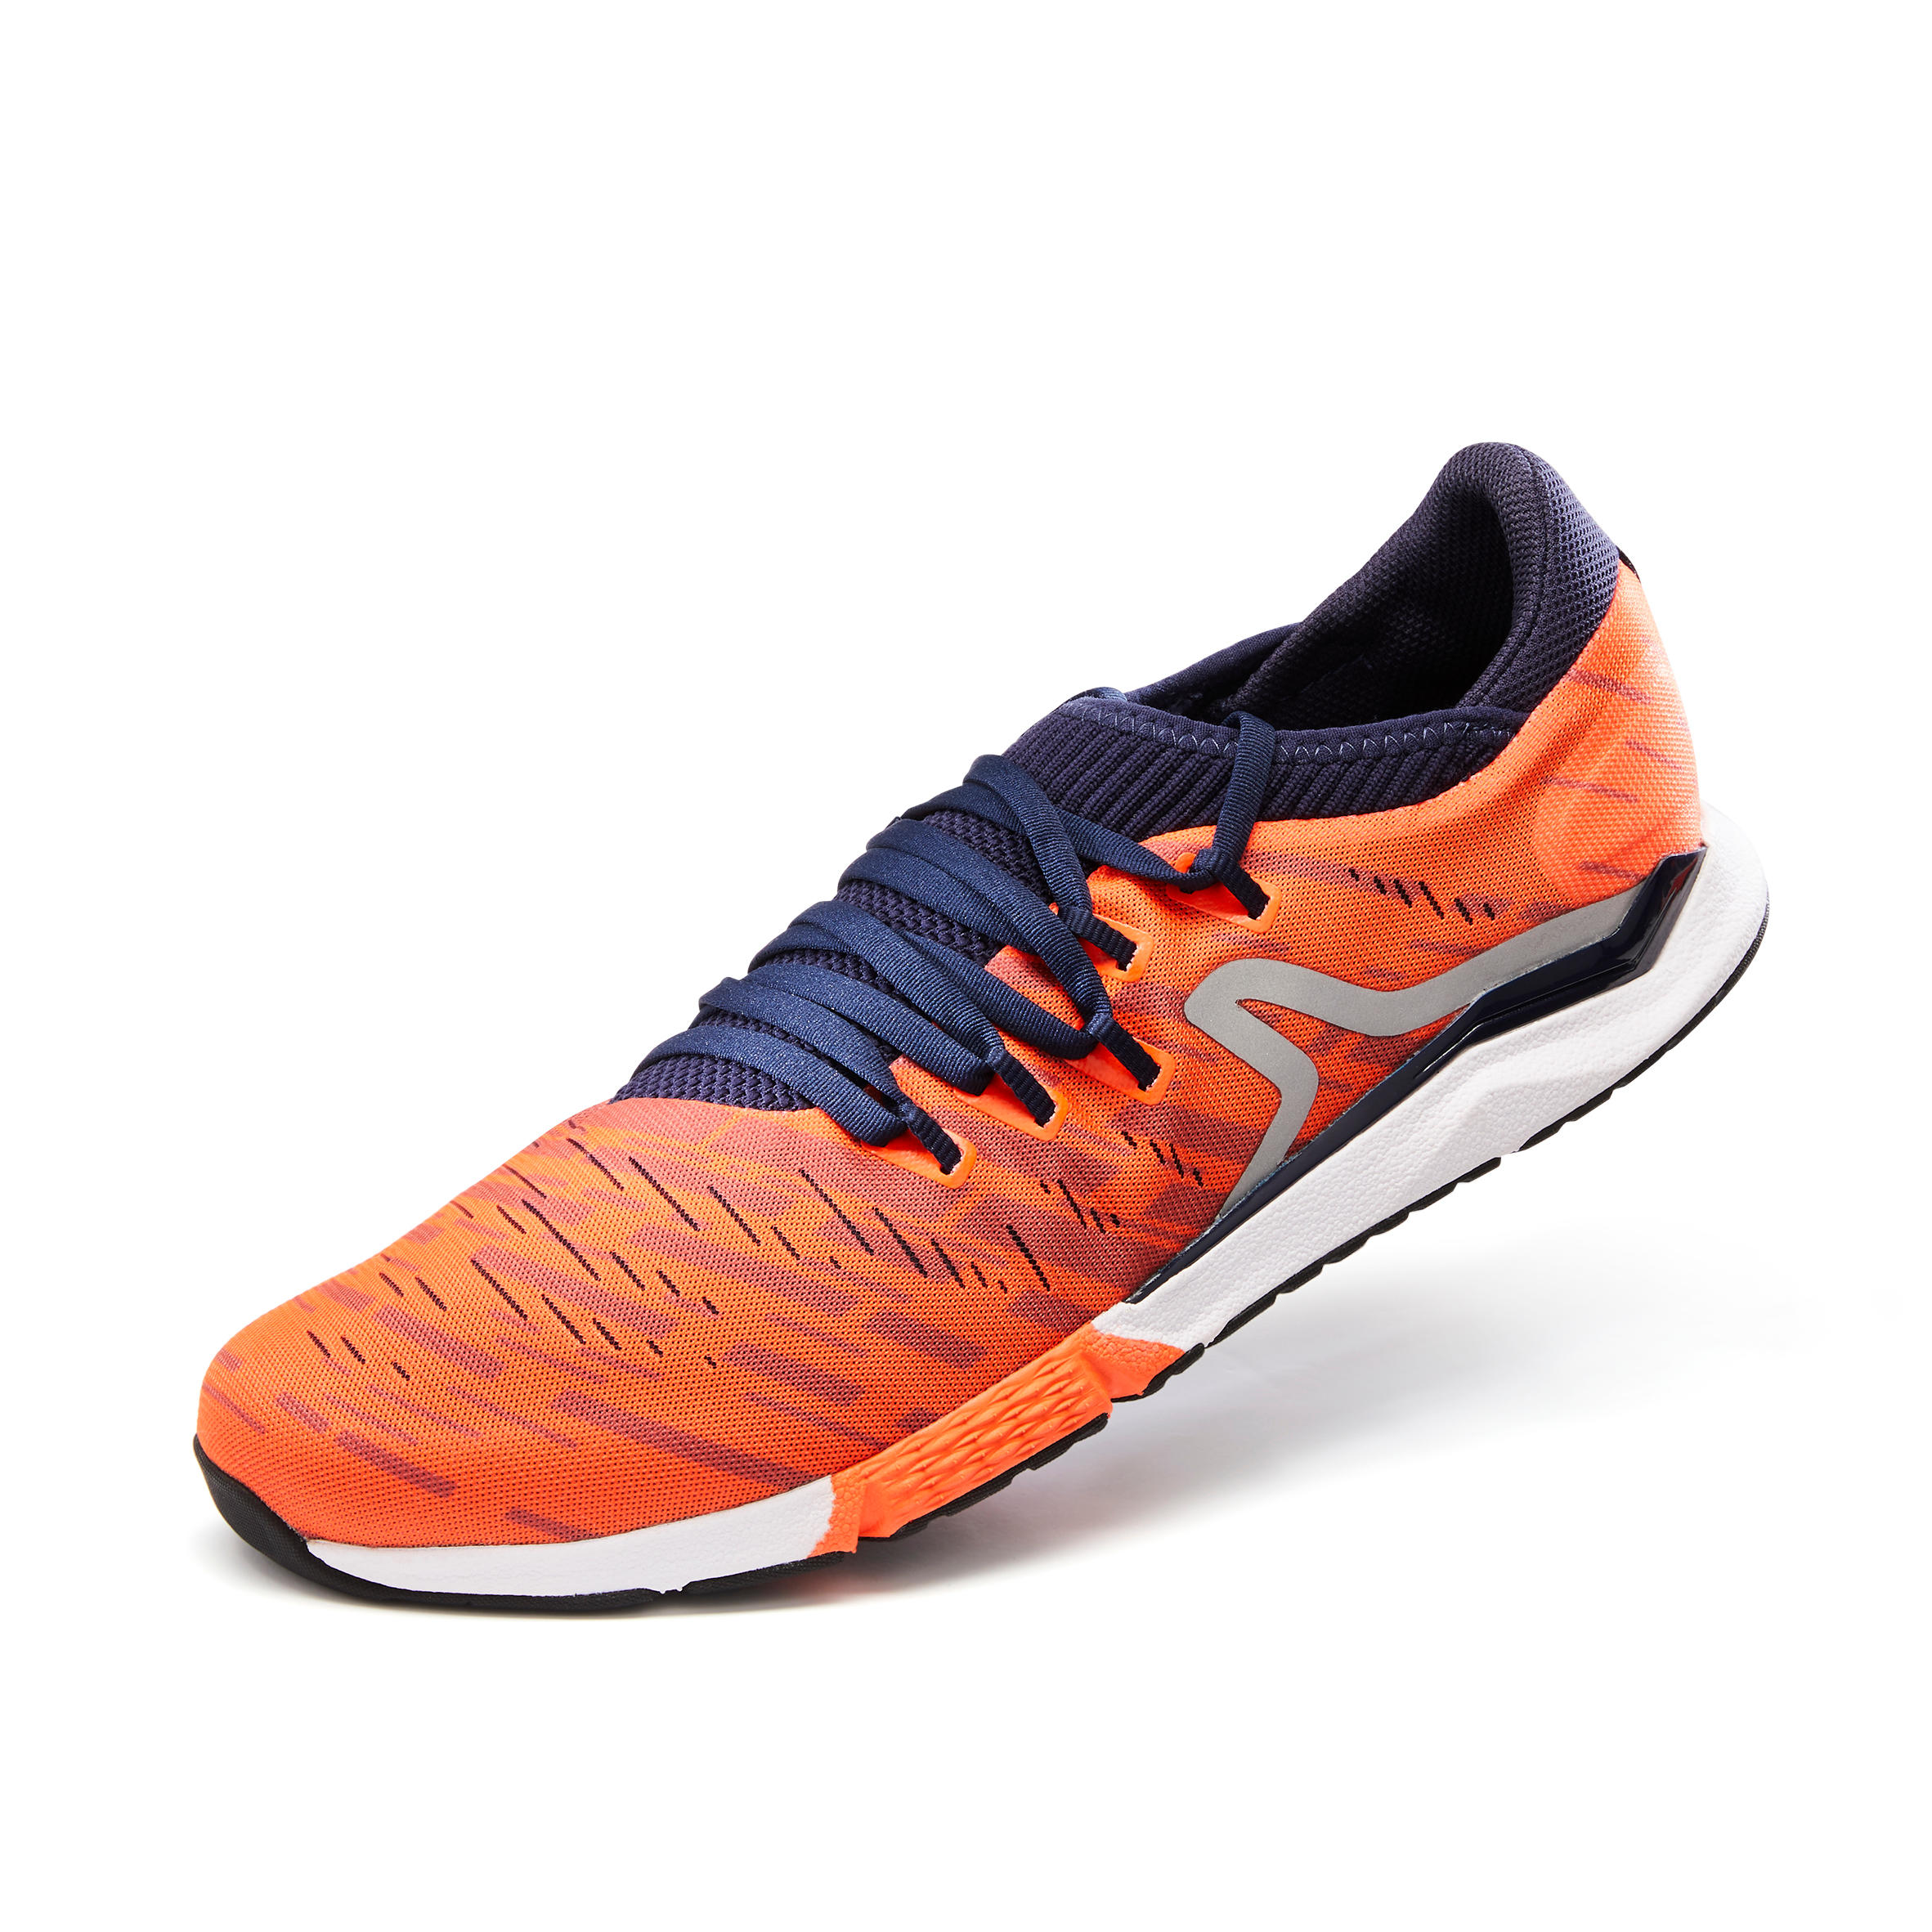 RW 900 Race fitness walking shoes - orange 11/12